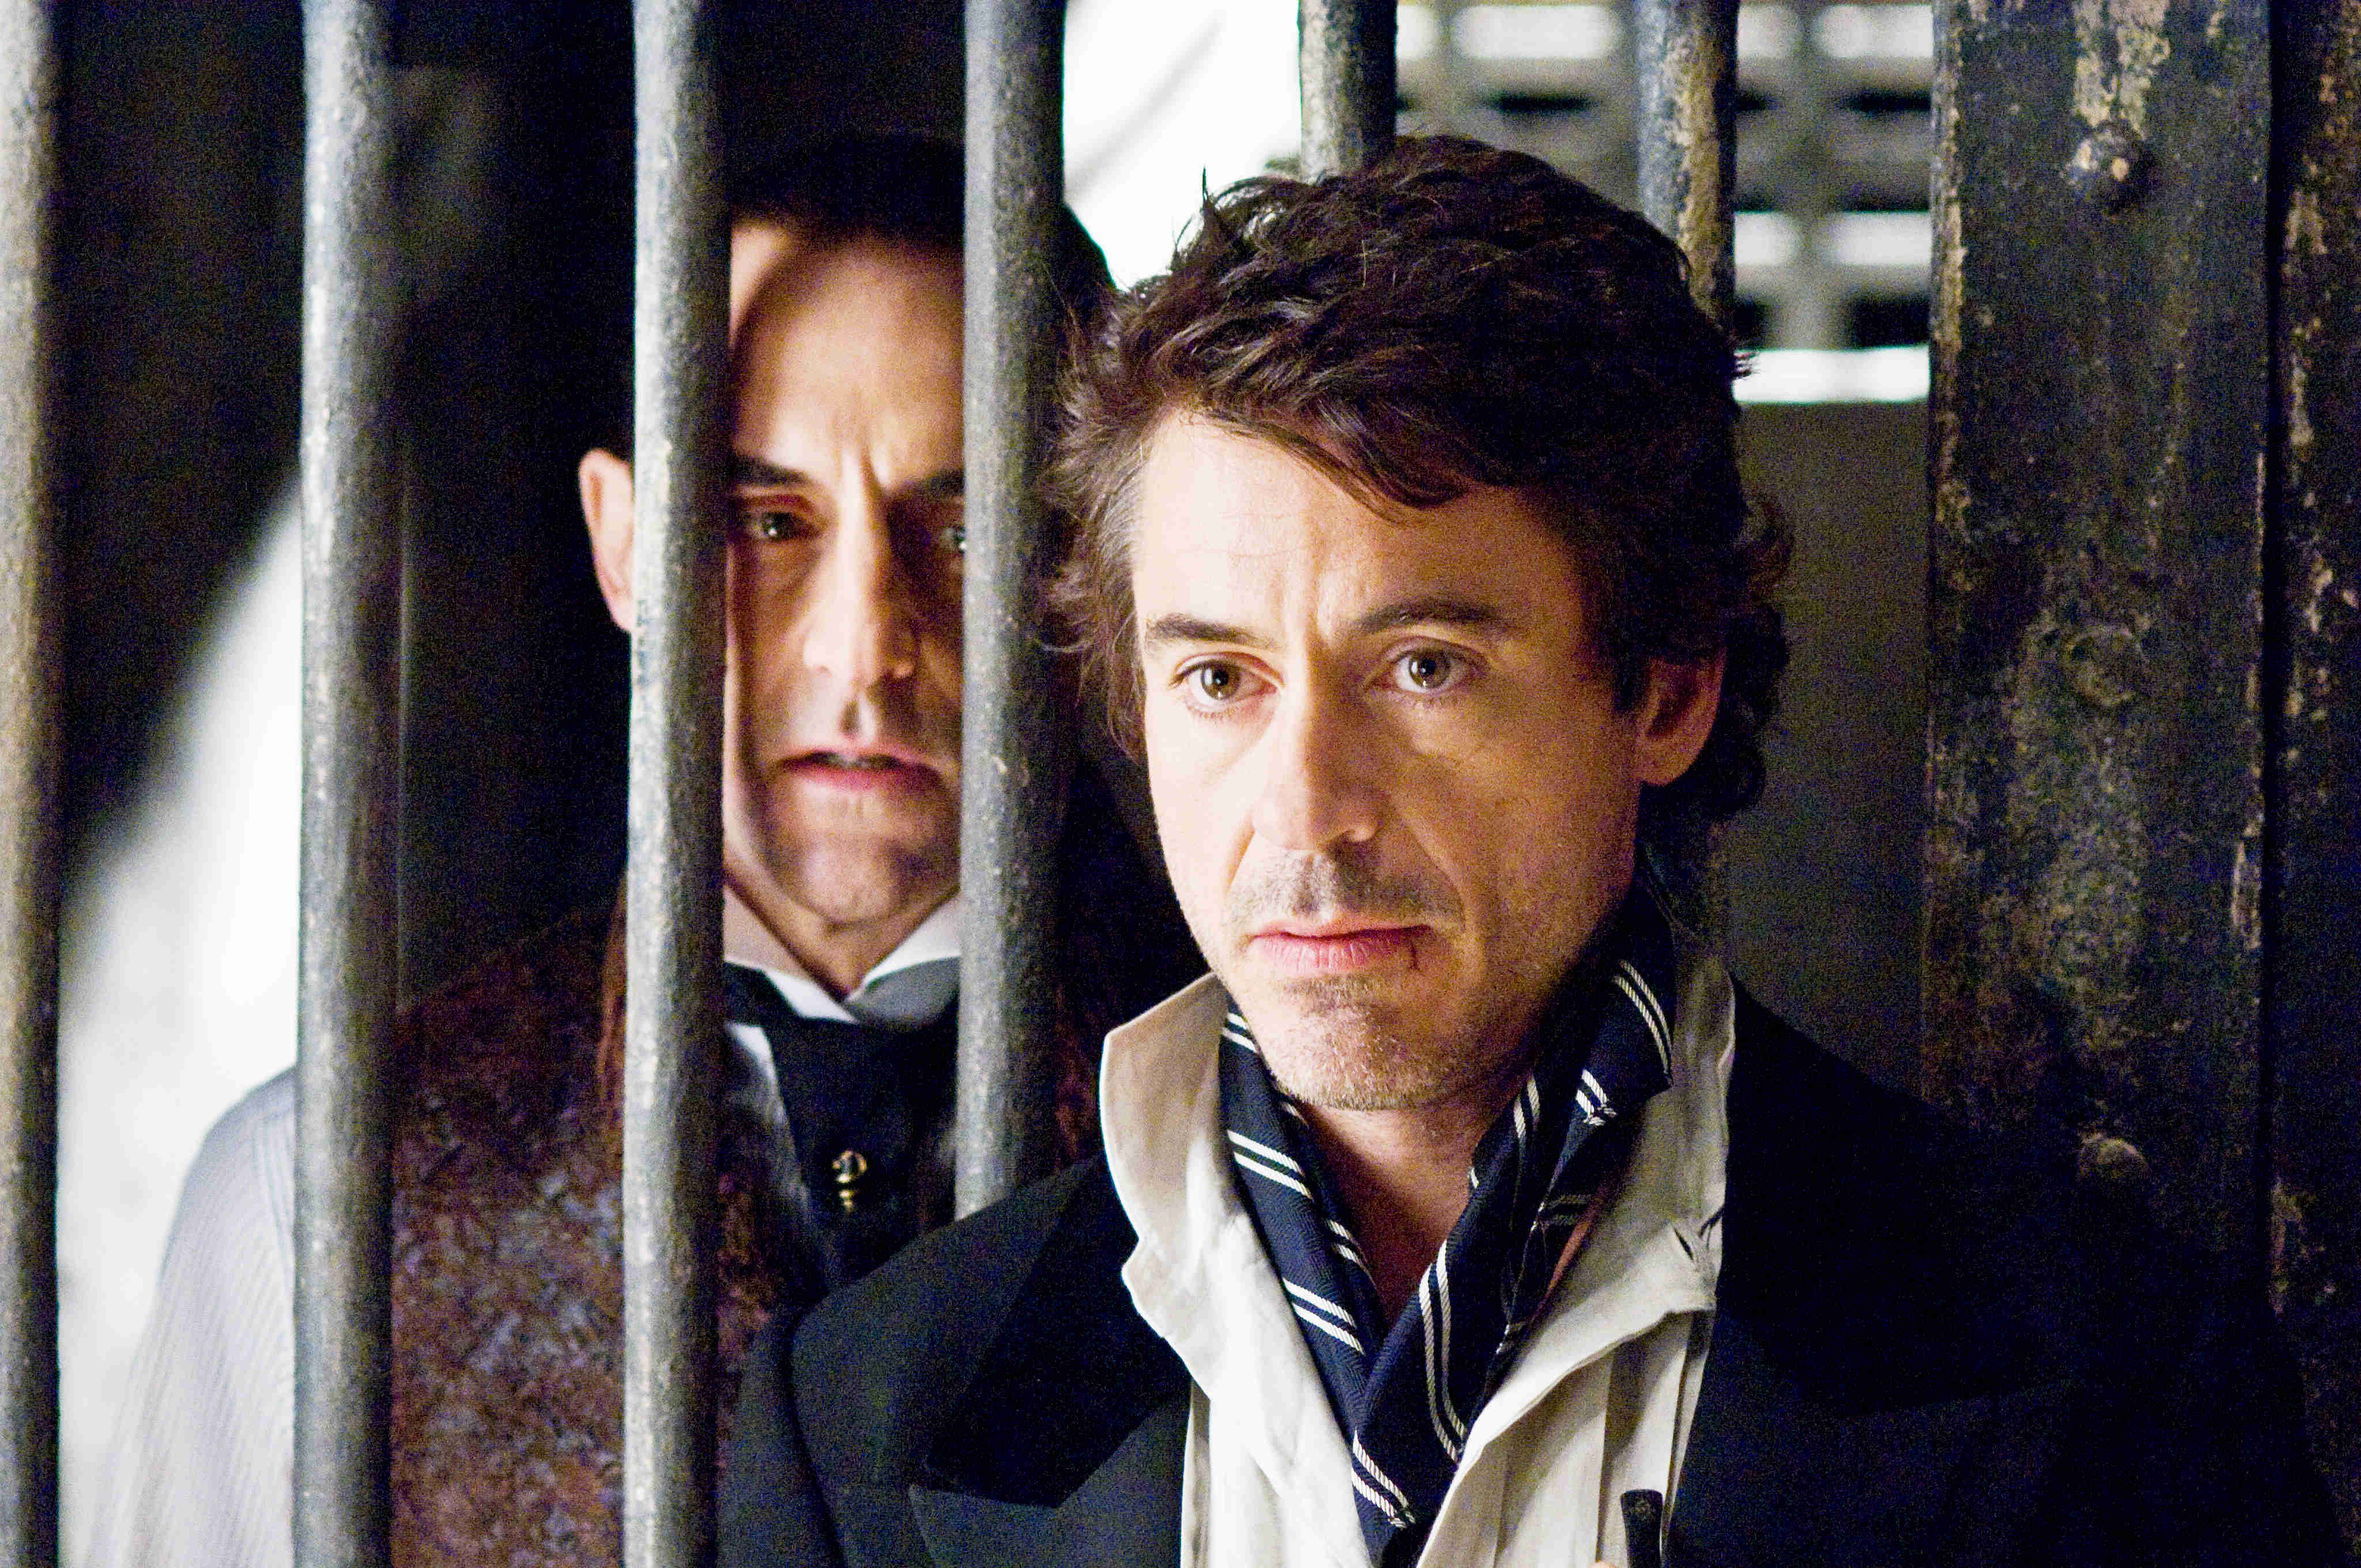 Mark Strong stars as Lord Blackwood and Robert Downey Jr. stars as Sherlock Holmes in Warner Bros. Pictures' Sherlock Holmes (2009)